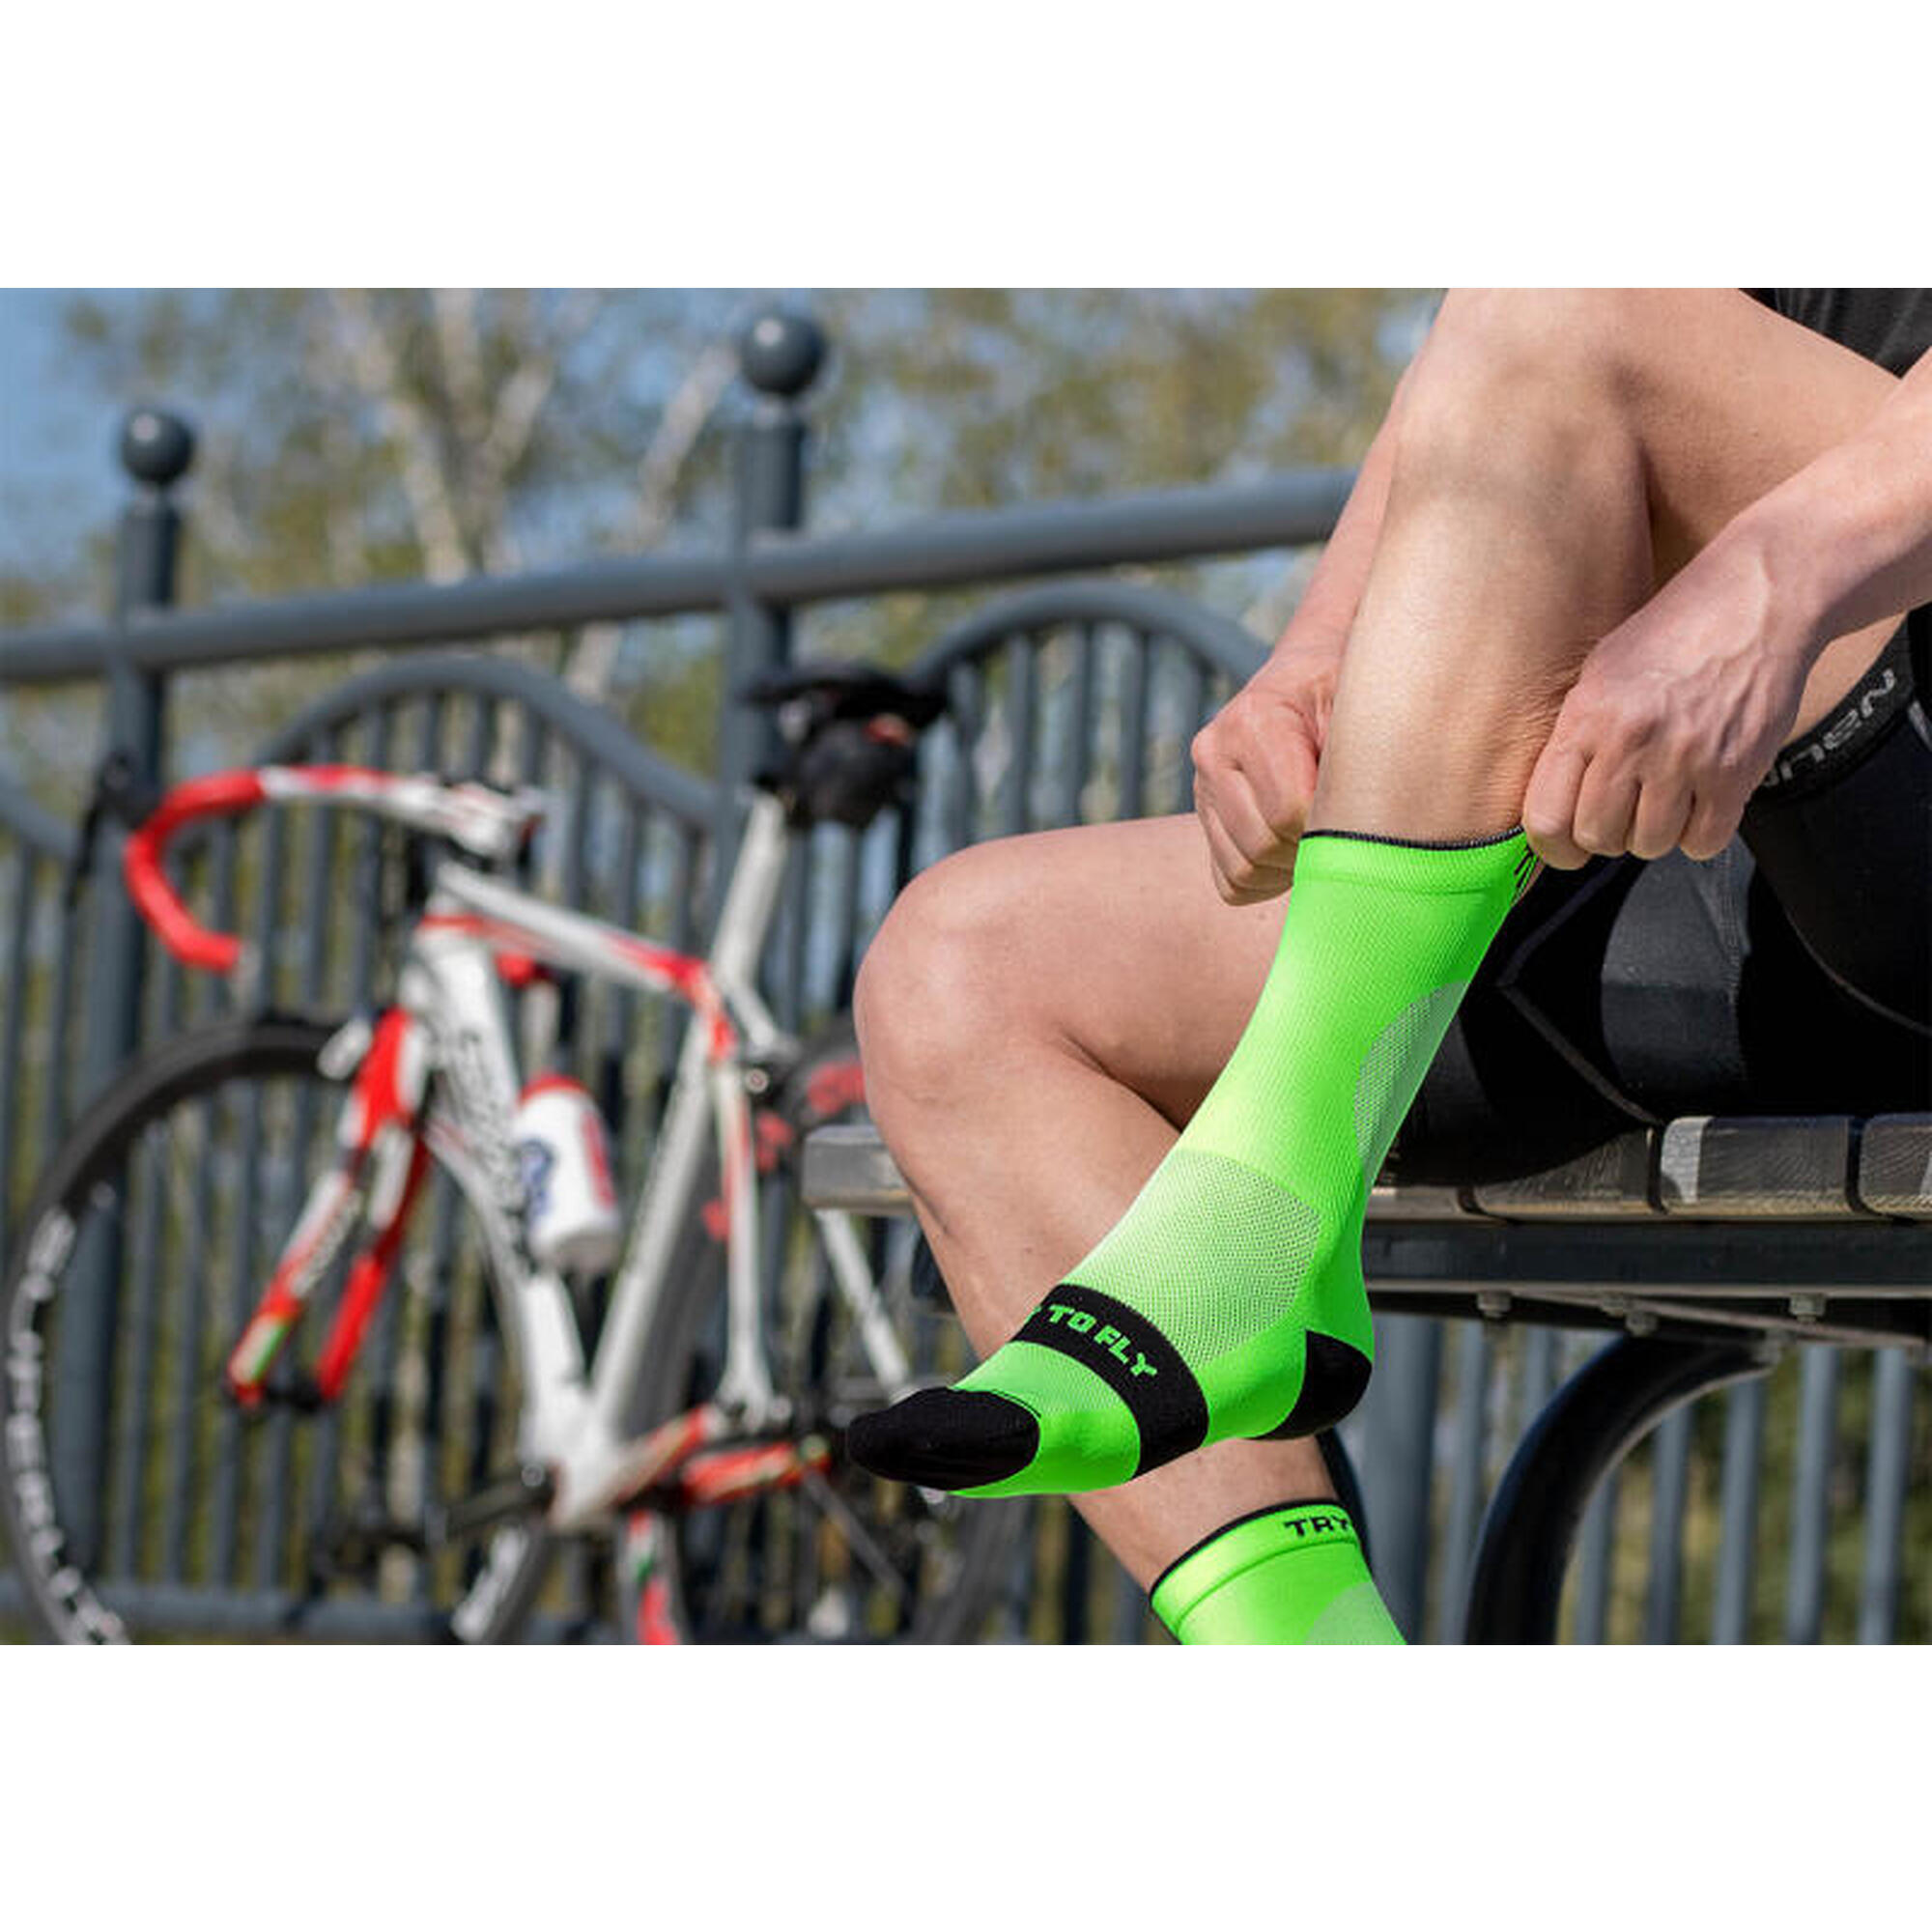 Neonzöld  színű vékony kerékpáros zokni